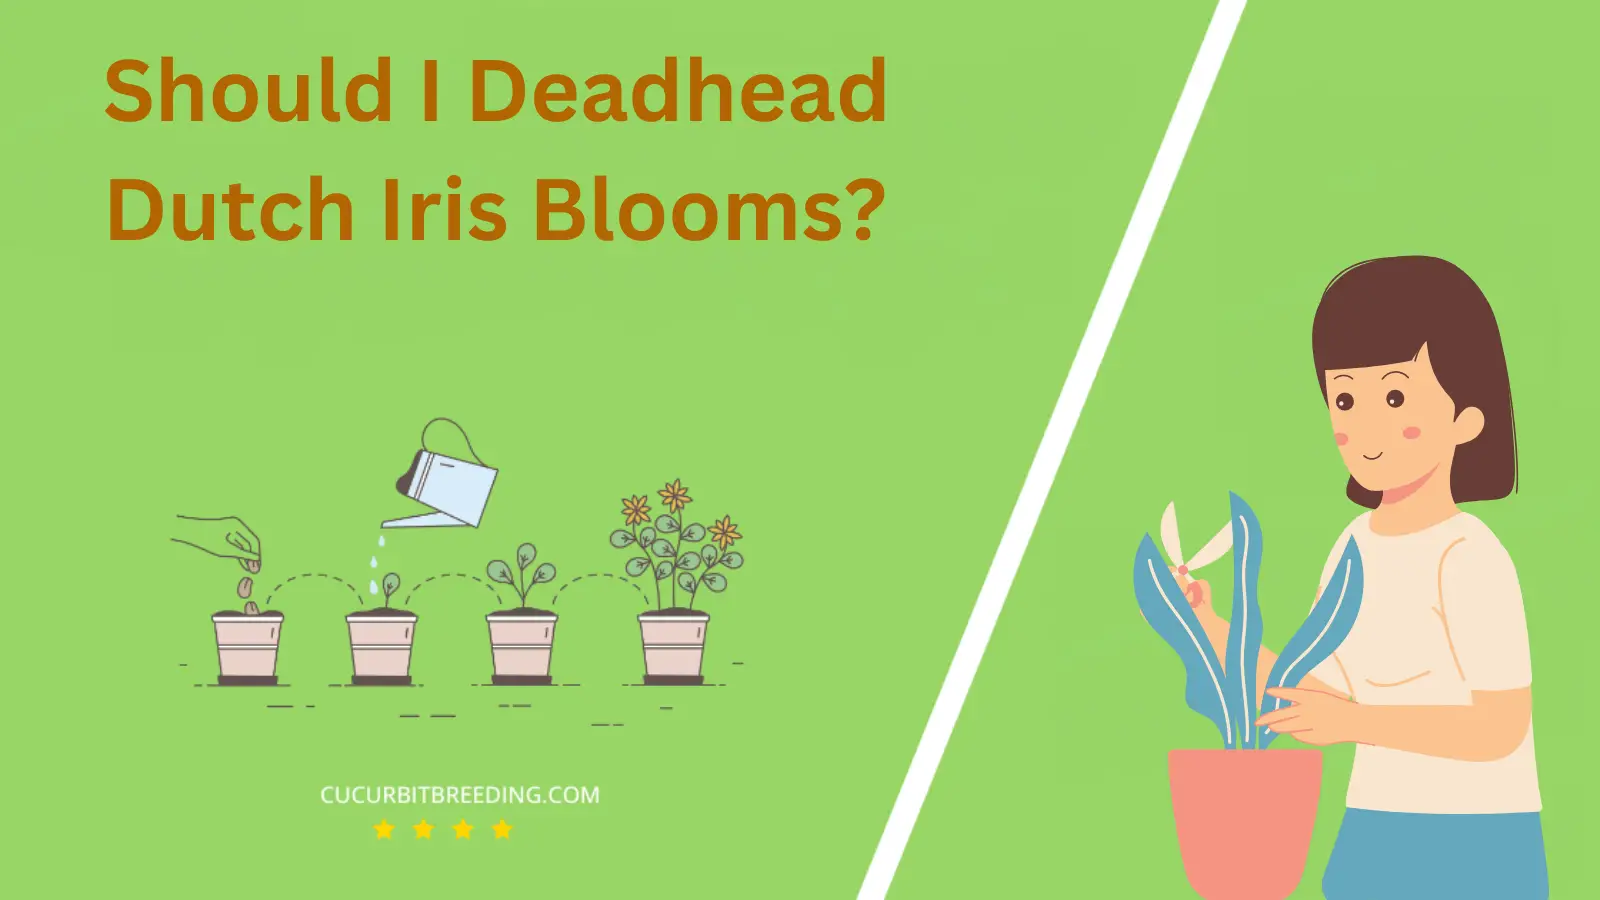 Should I Deadhead Dutch Iris Blooms?